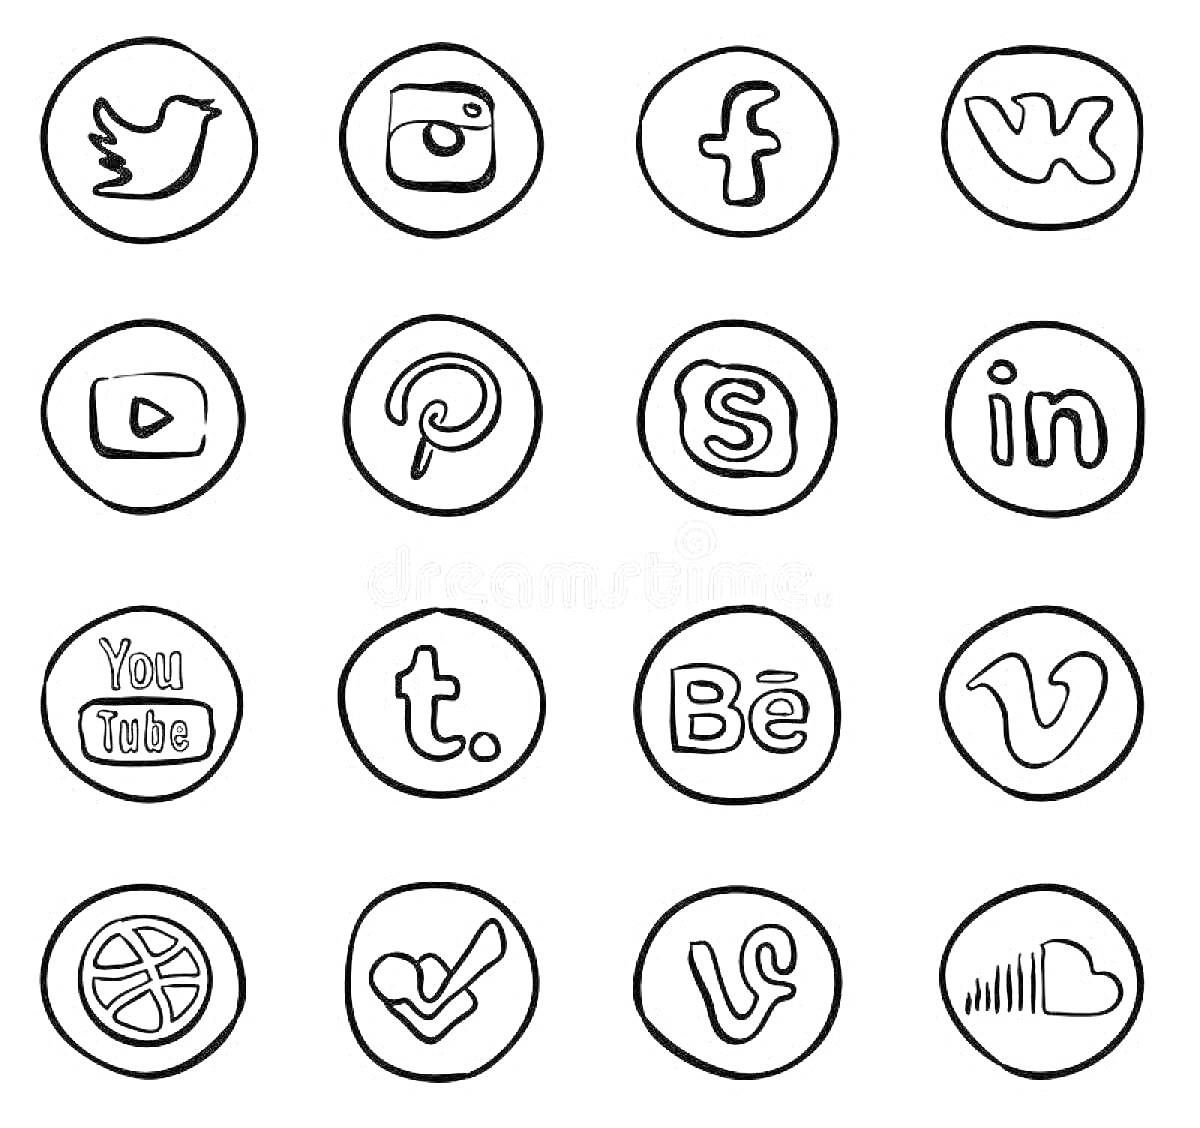 Логотипы приложений: Twitter, Instagram, Facebook, VK, YouTube, Pinterest, Skype, LinkedIn, YouTube, Tumblr, Behance, Vimeo, Dribbble, Foursquare, Vine, SoundCloud